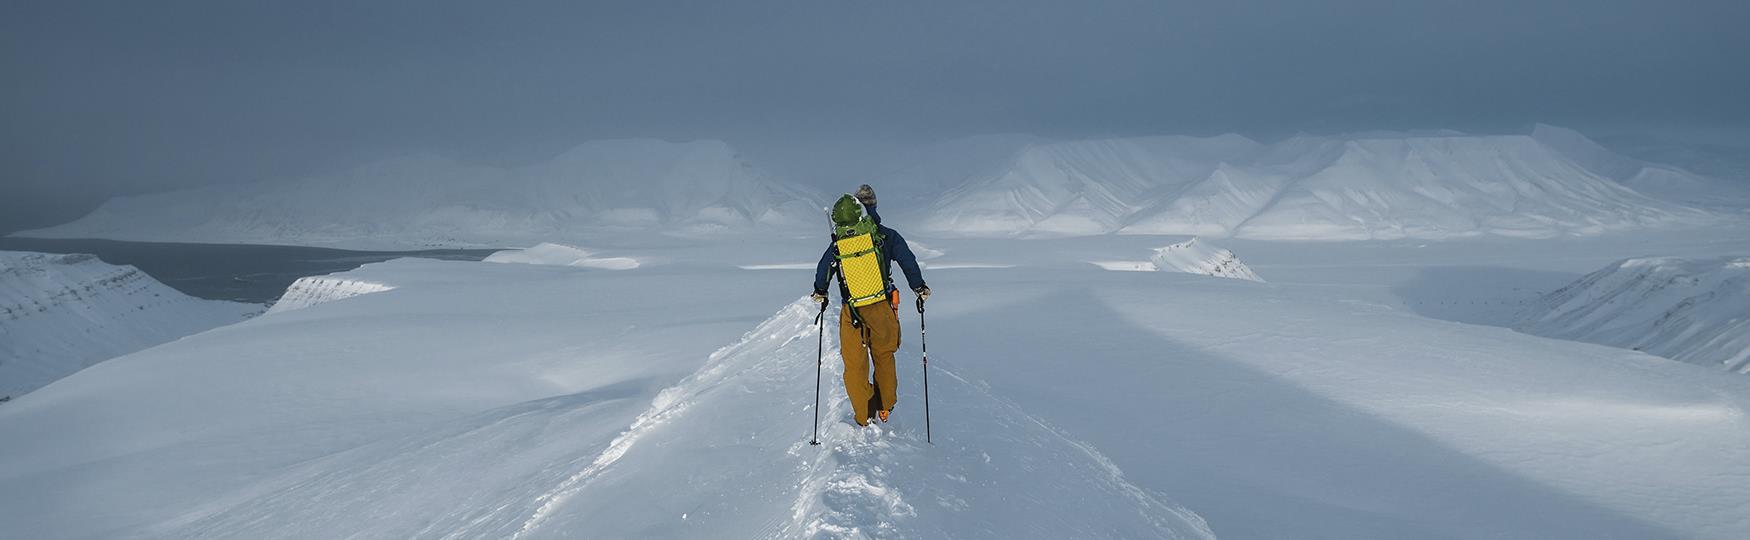 Ski touring in Svalbard